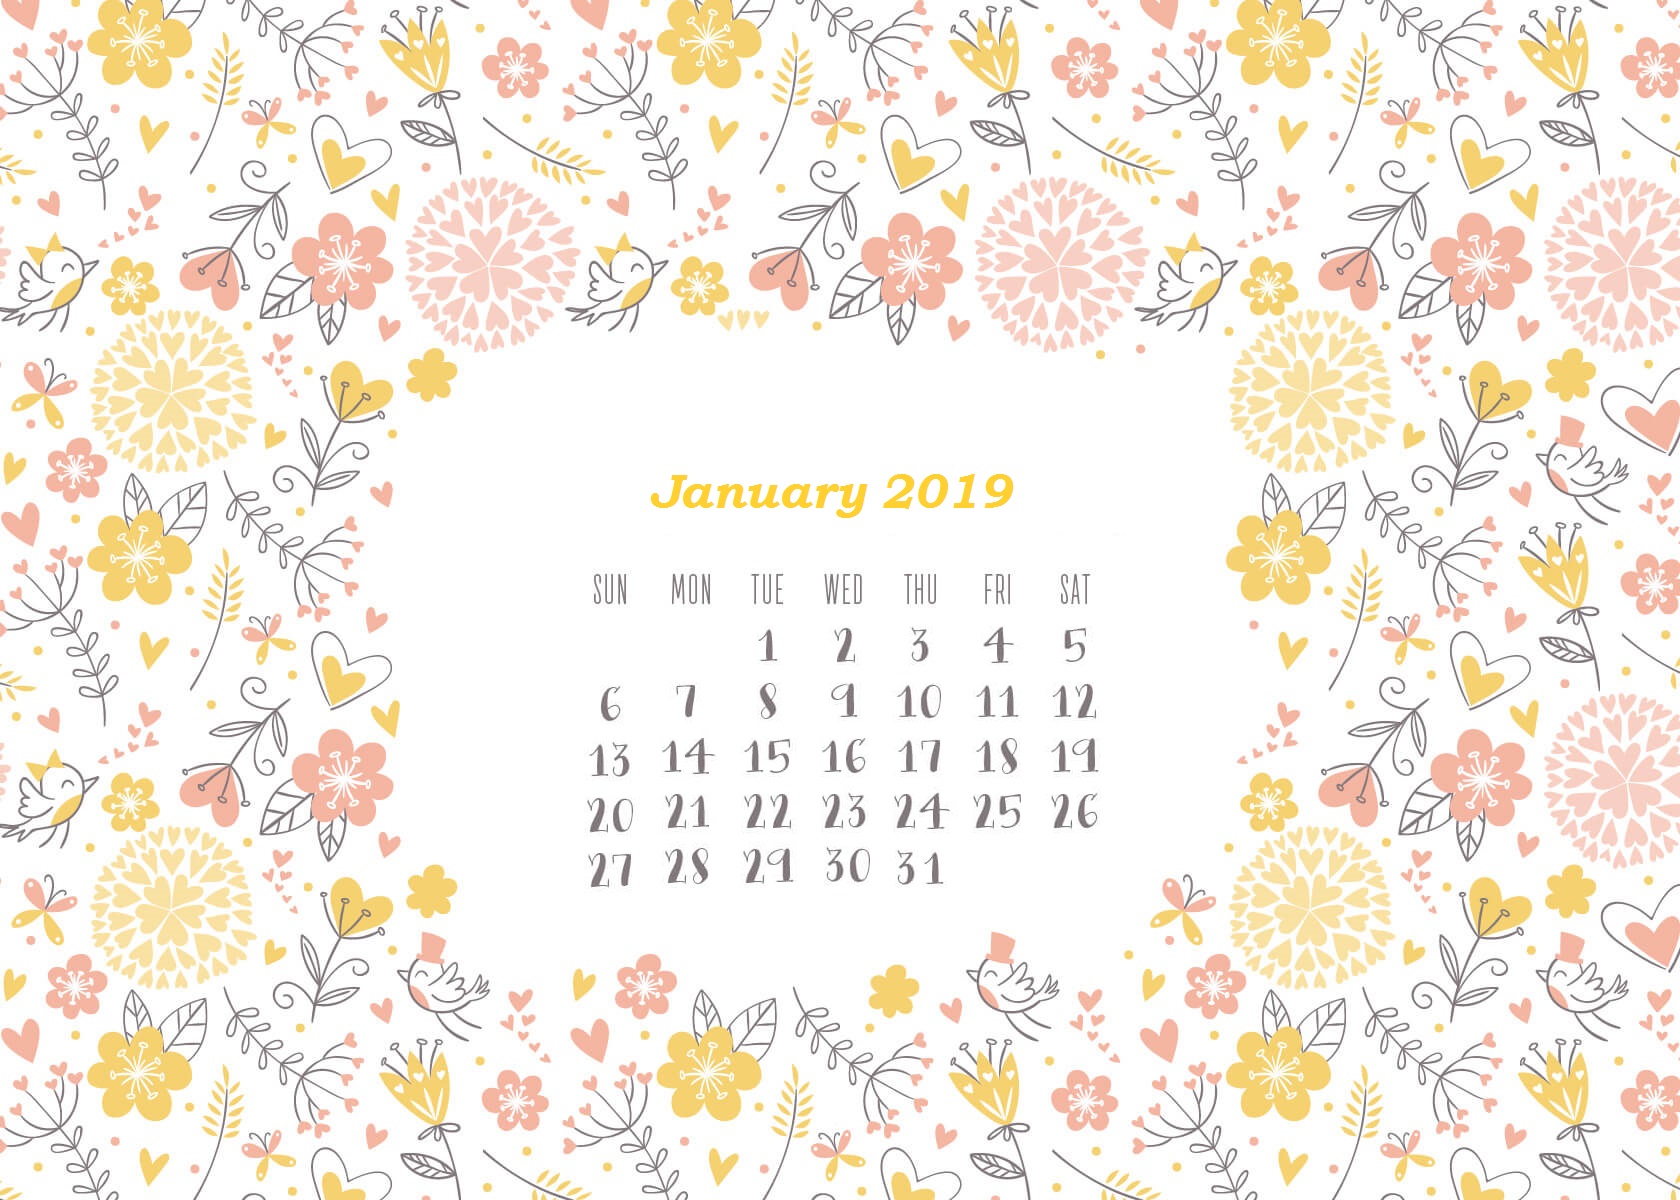 January 2019 HD Calendar Wallpapers Calendar 2019